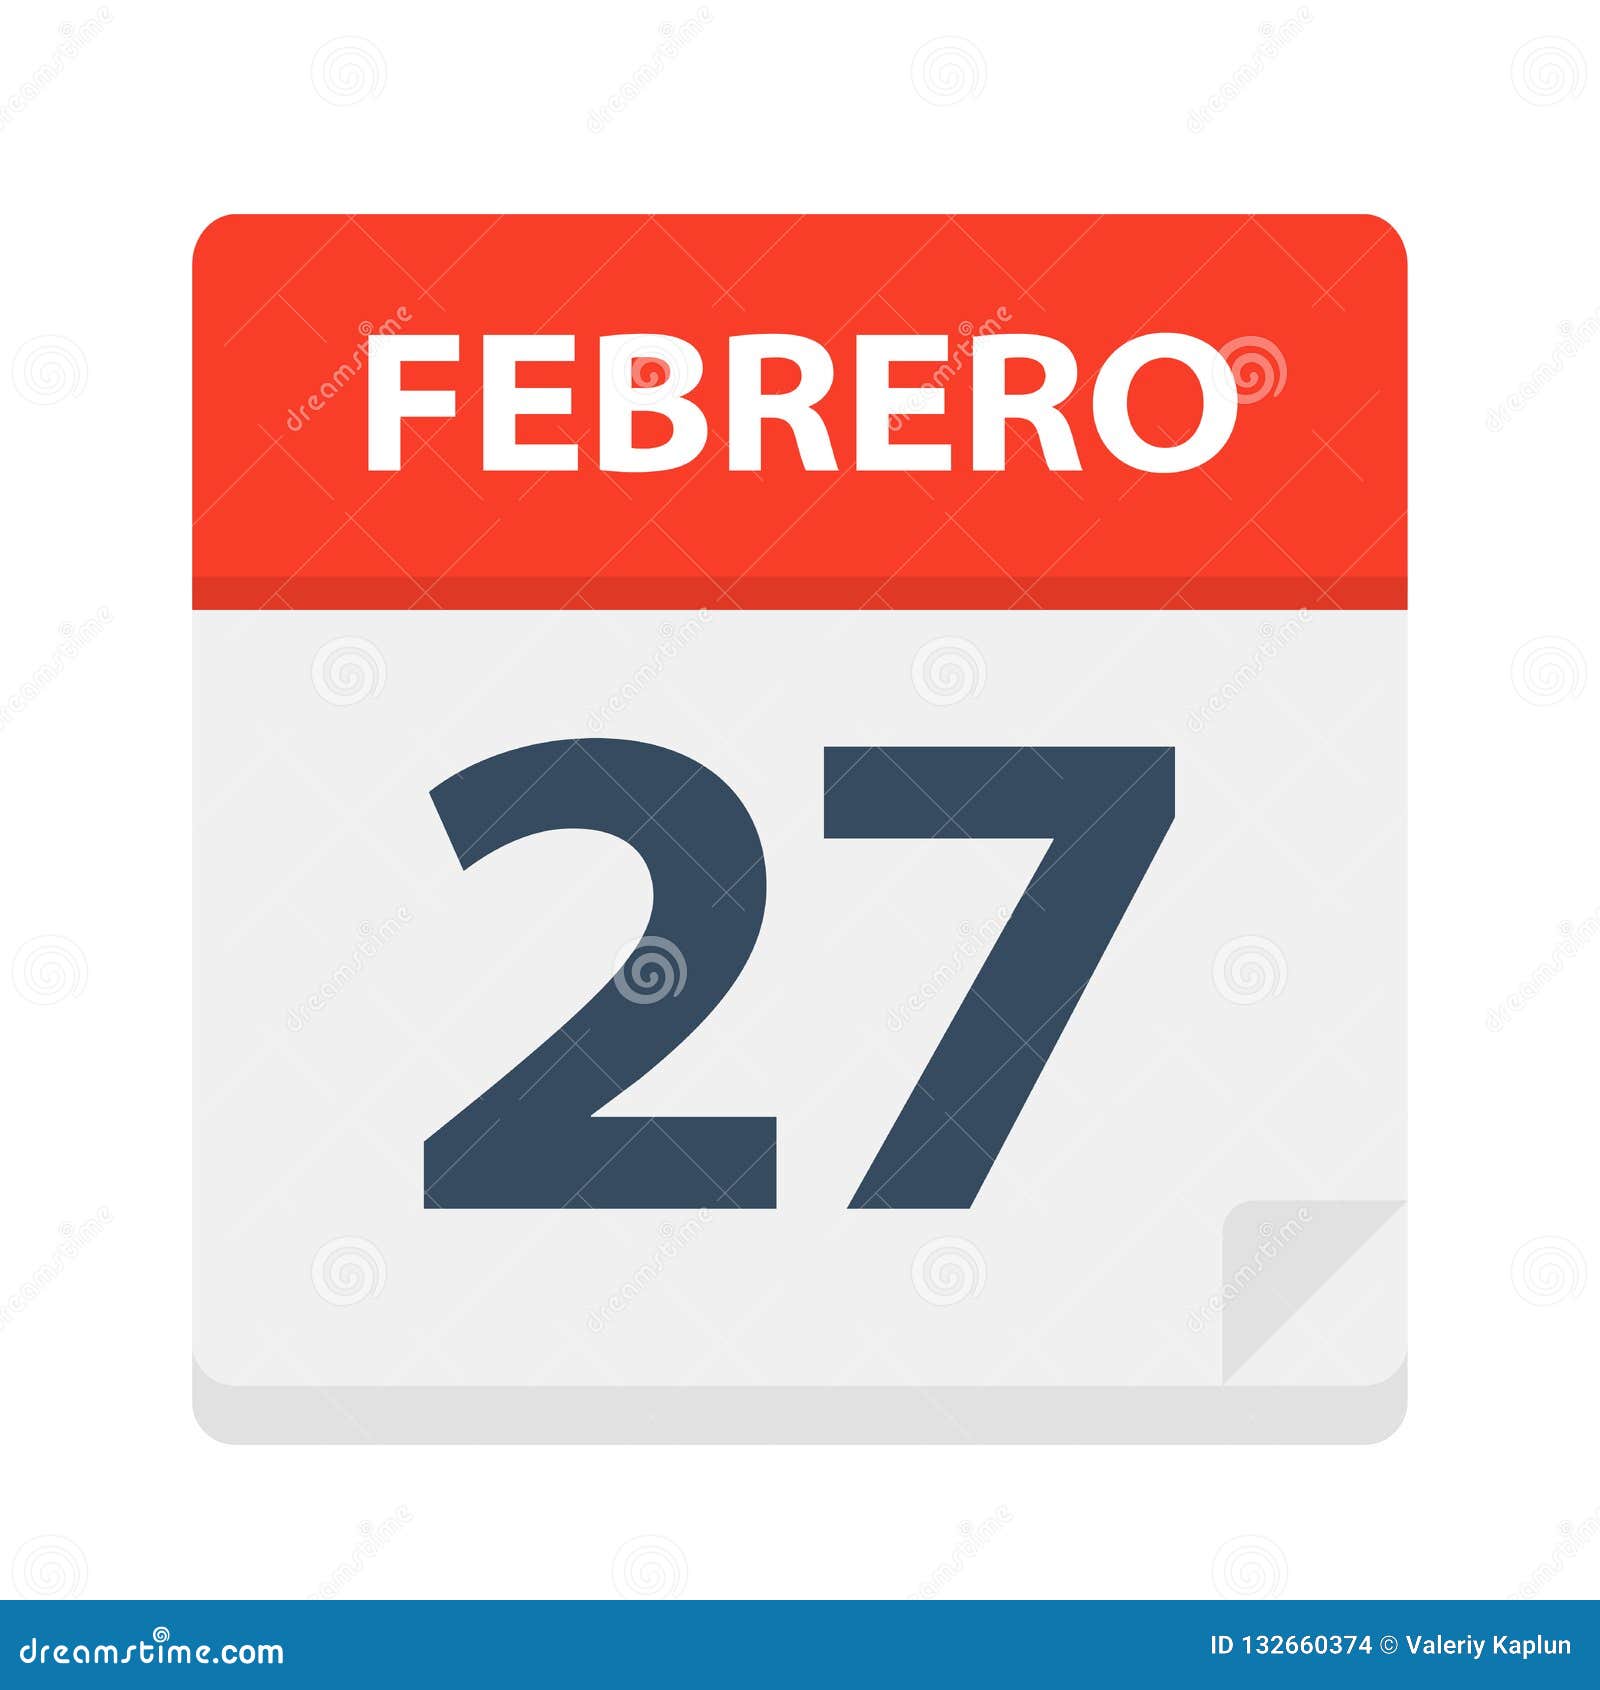 febrero 27 - calendar icon - february 27.   of spanish calendar leaf